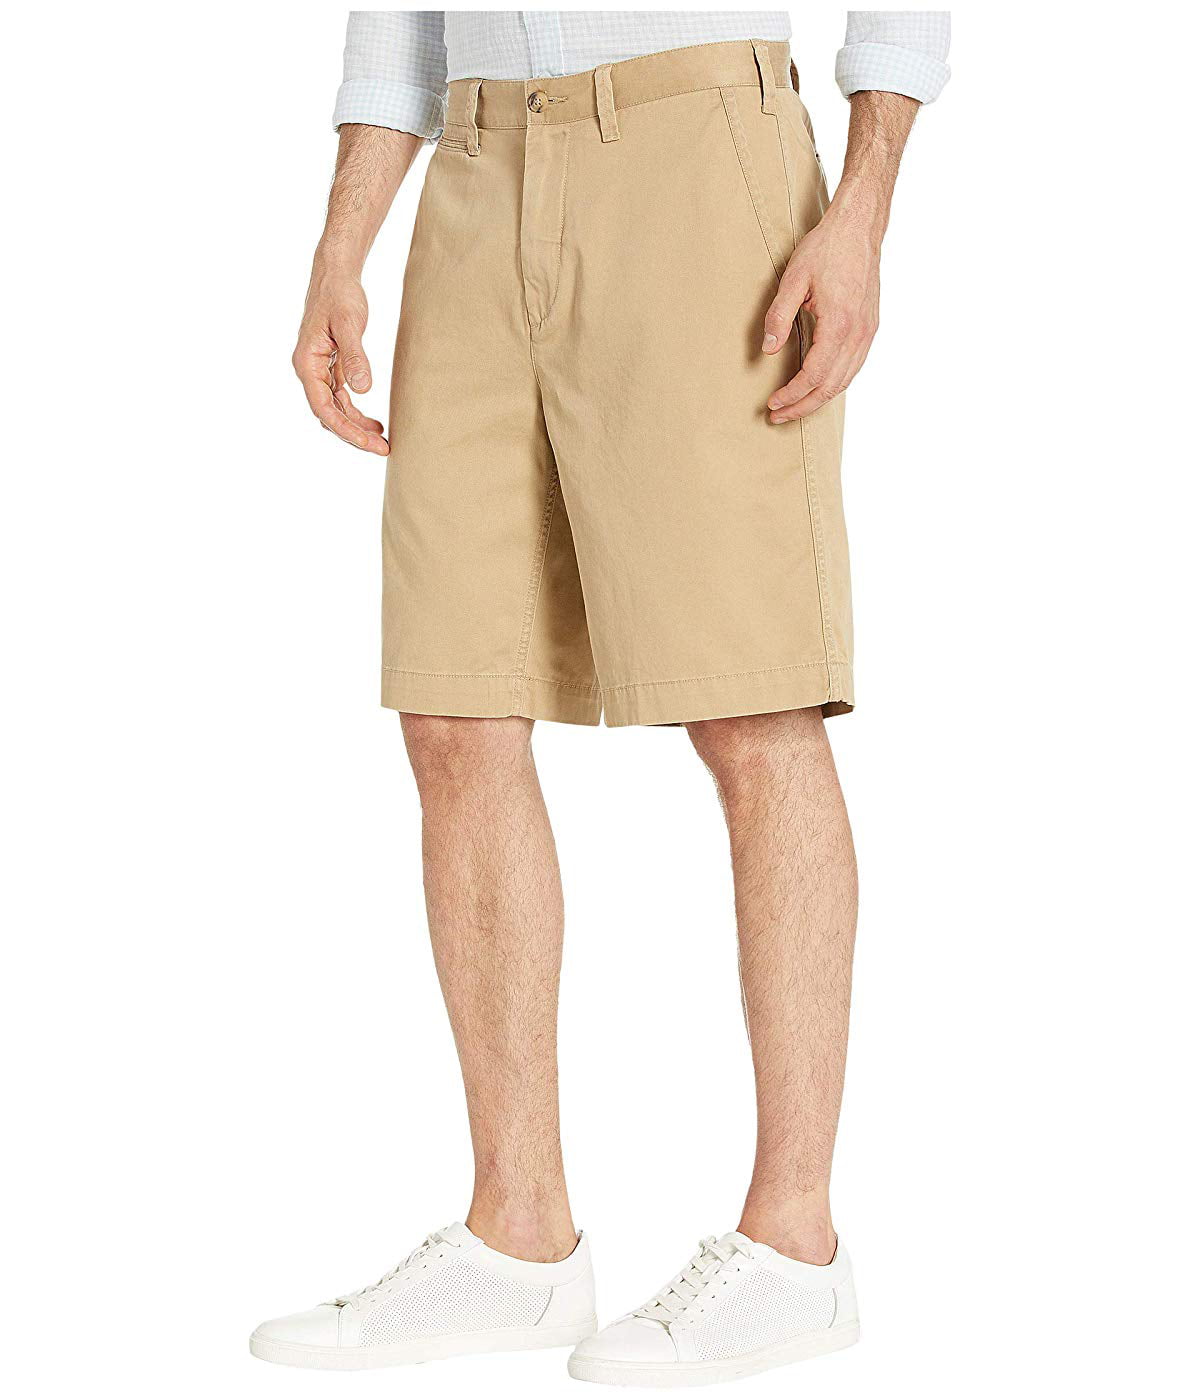 Merrell Helio Shorts